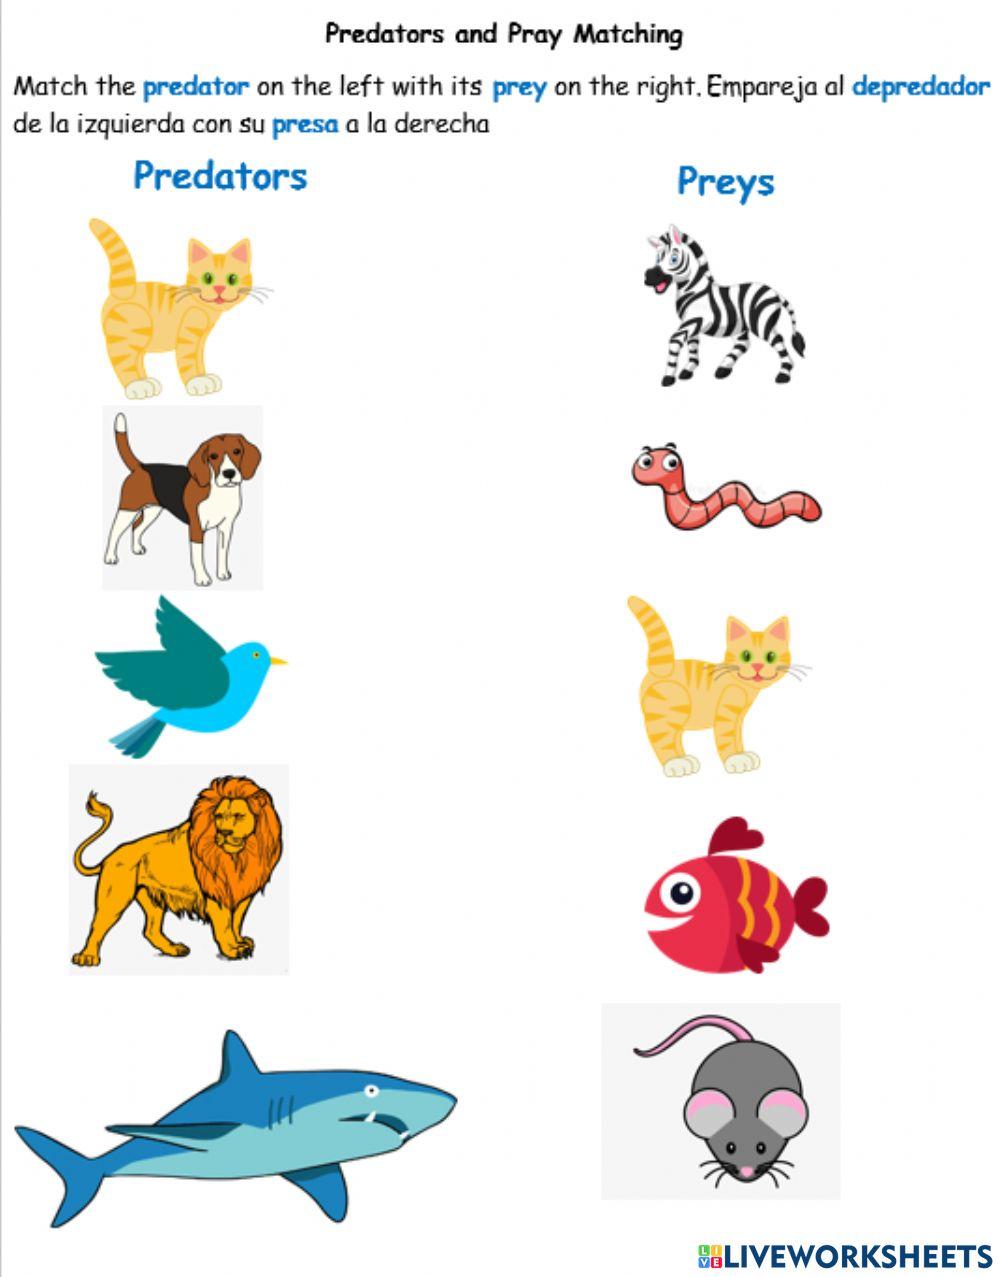 Predators and preys